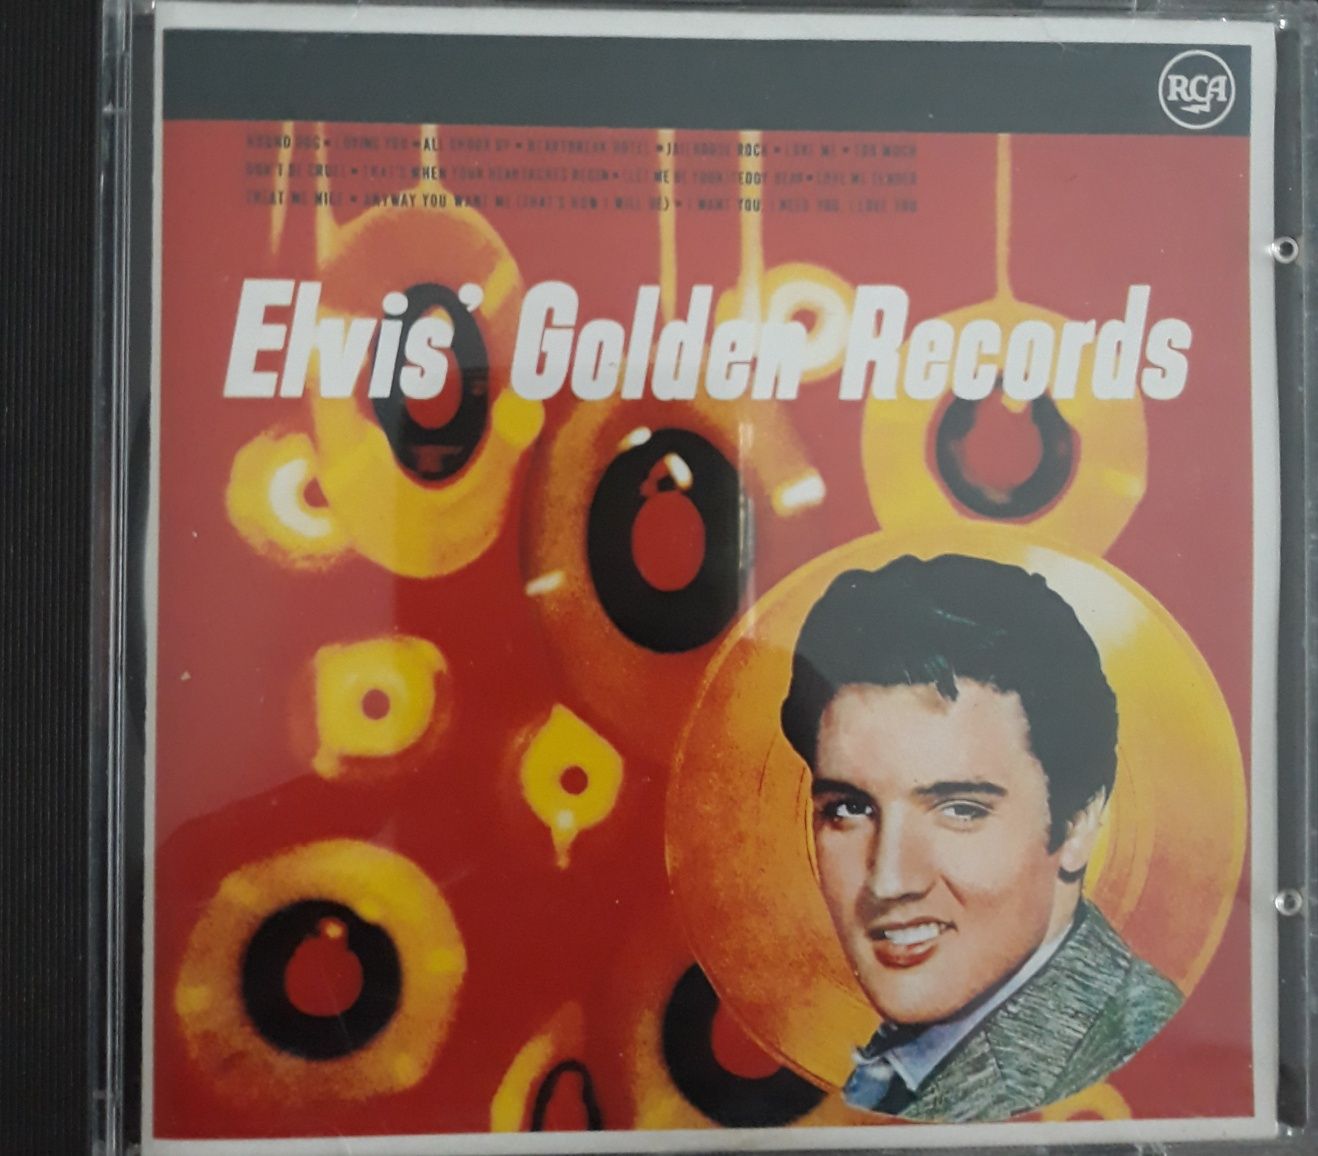 CD Elvis Presley - Golden Records